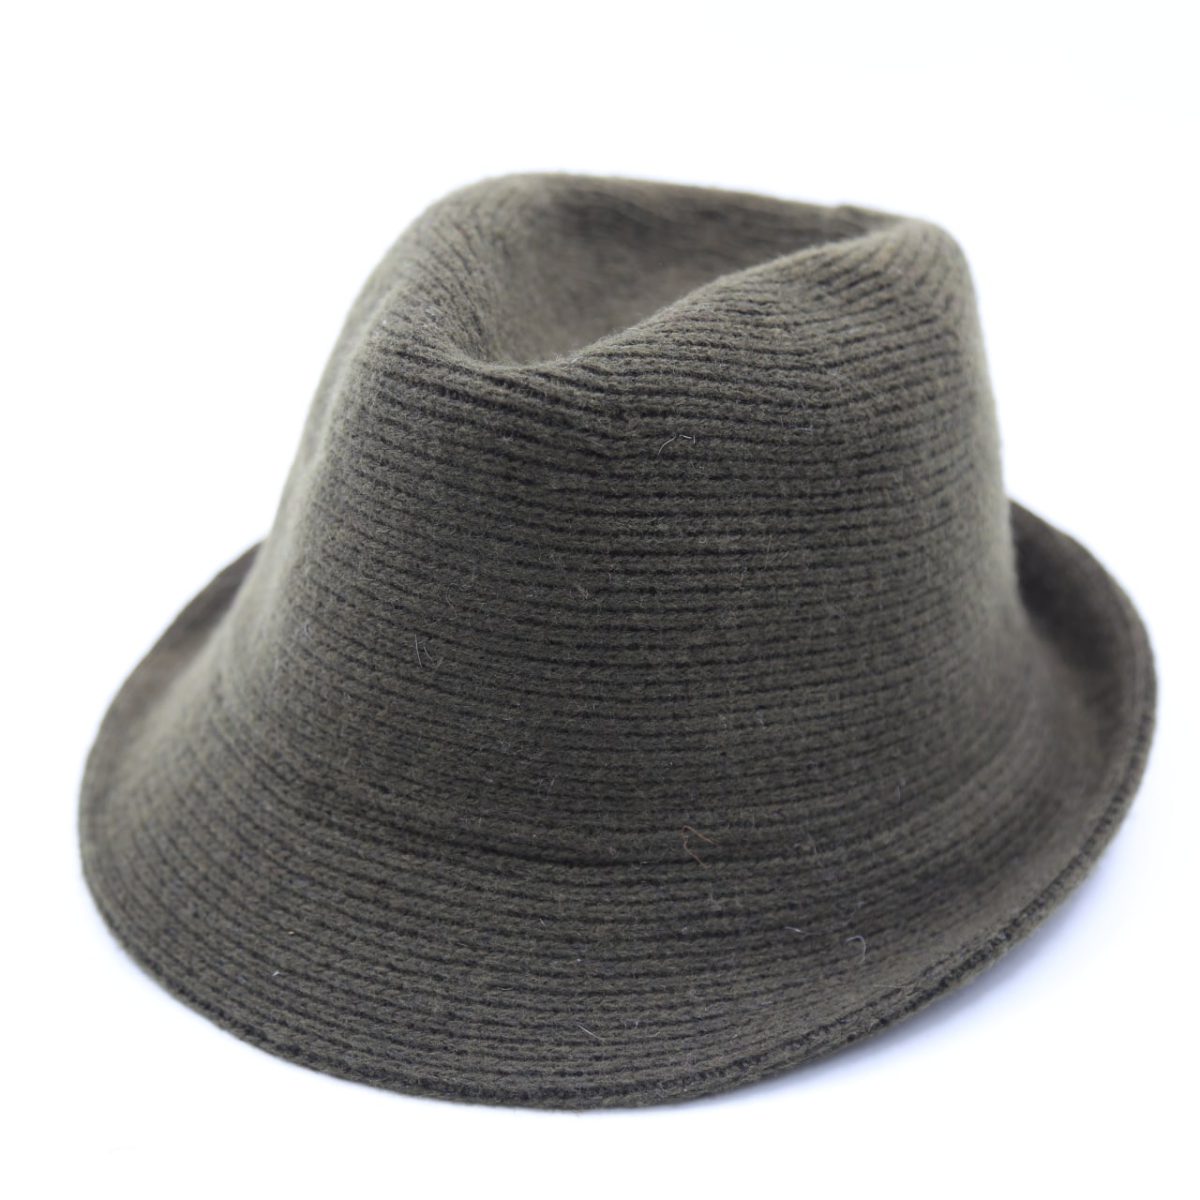 کلاه شاپو مردانه لبه دار طرح کلاسیک رنگ زغالی روشن بافت بیسیک